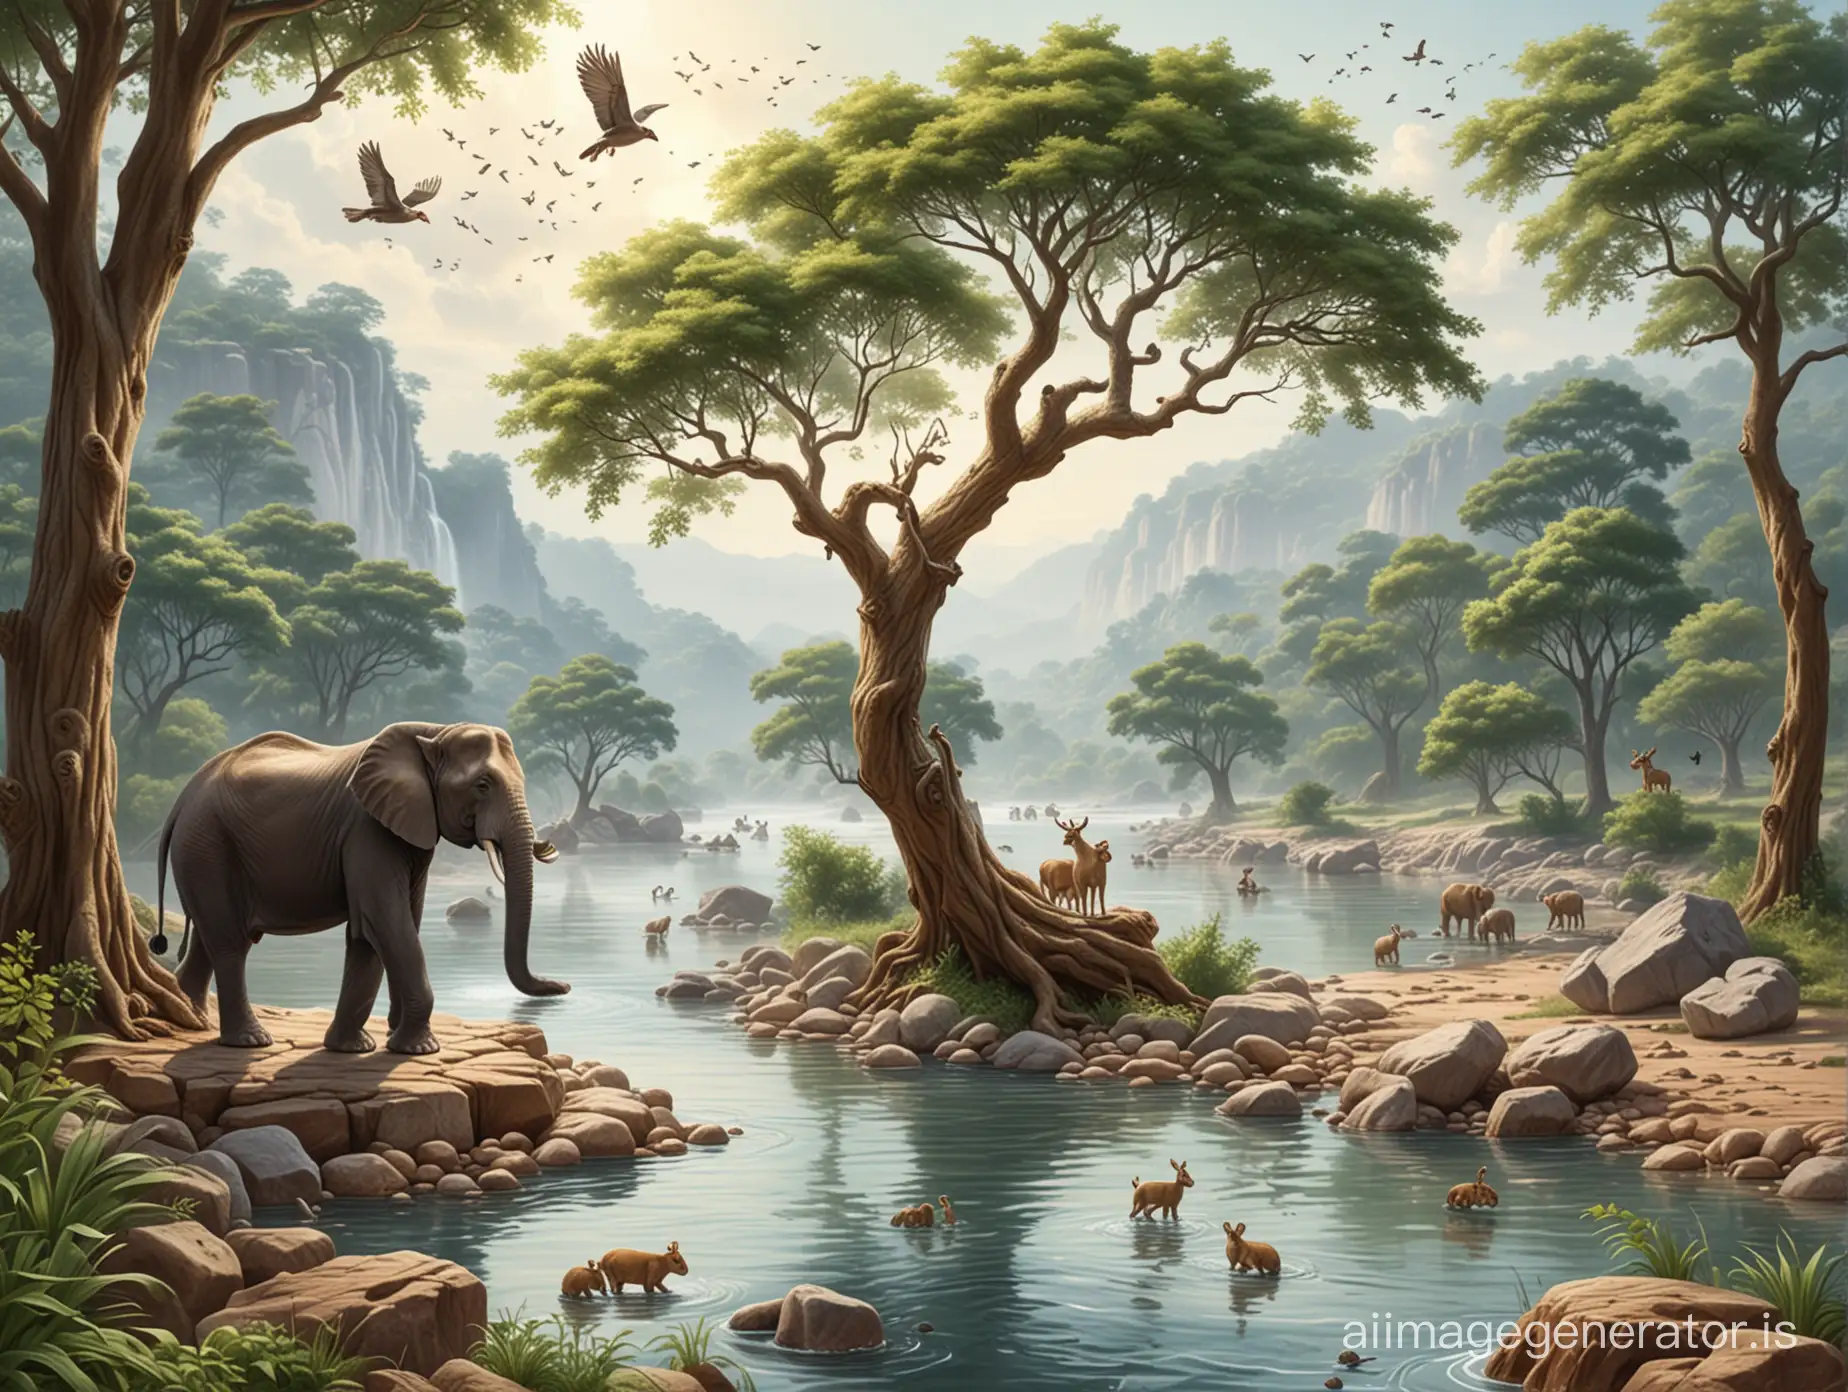 Wildlife-Harmony-River-Scene-with-Elephant-Deer-Monkey-and-More